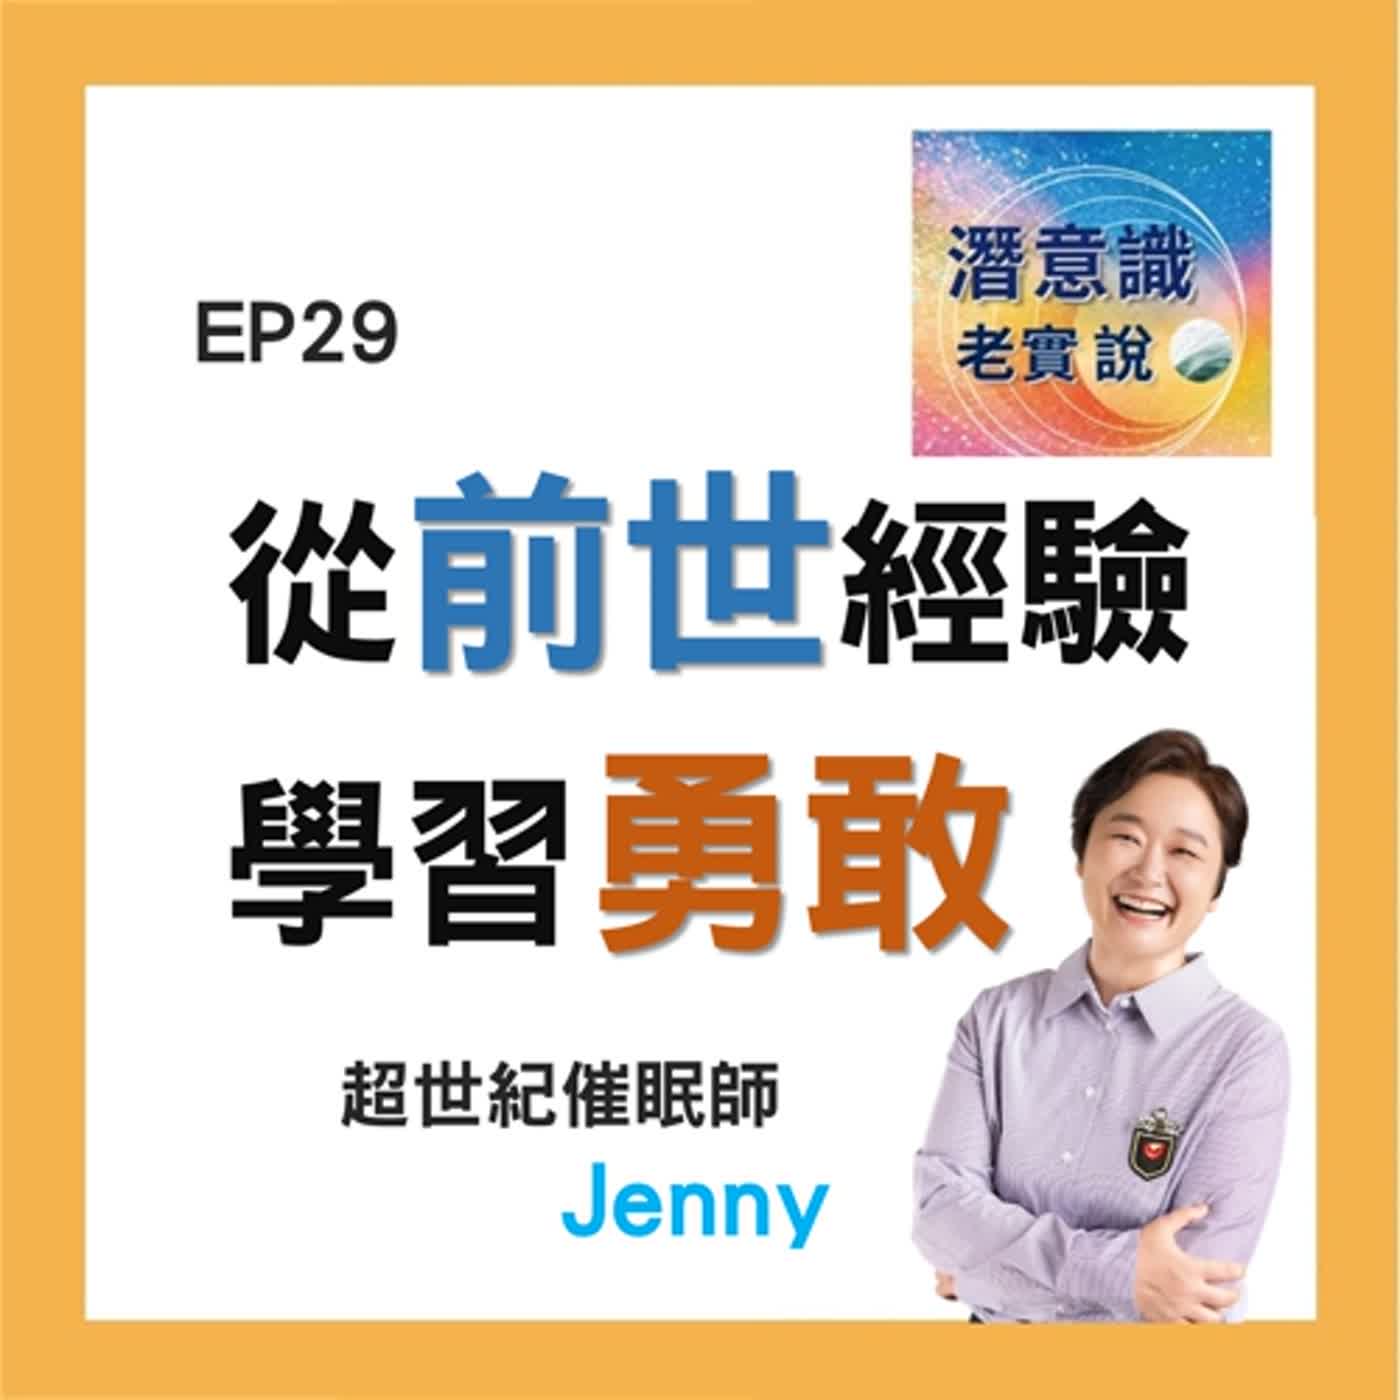 EP29｜從前世經驗學習勇敢｜催眠師Jenny